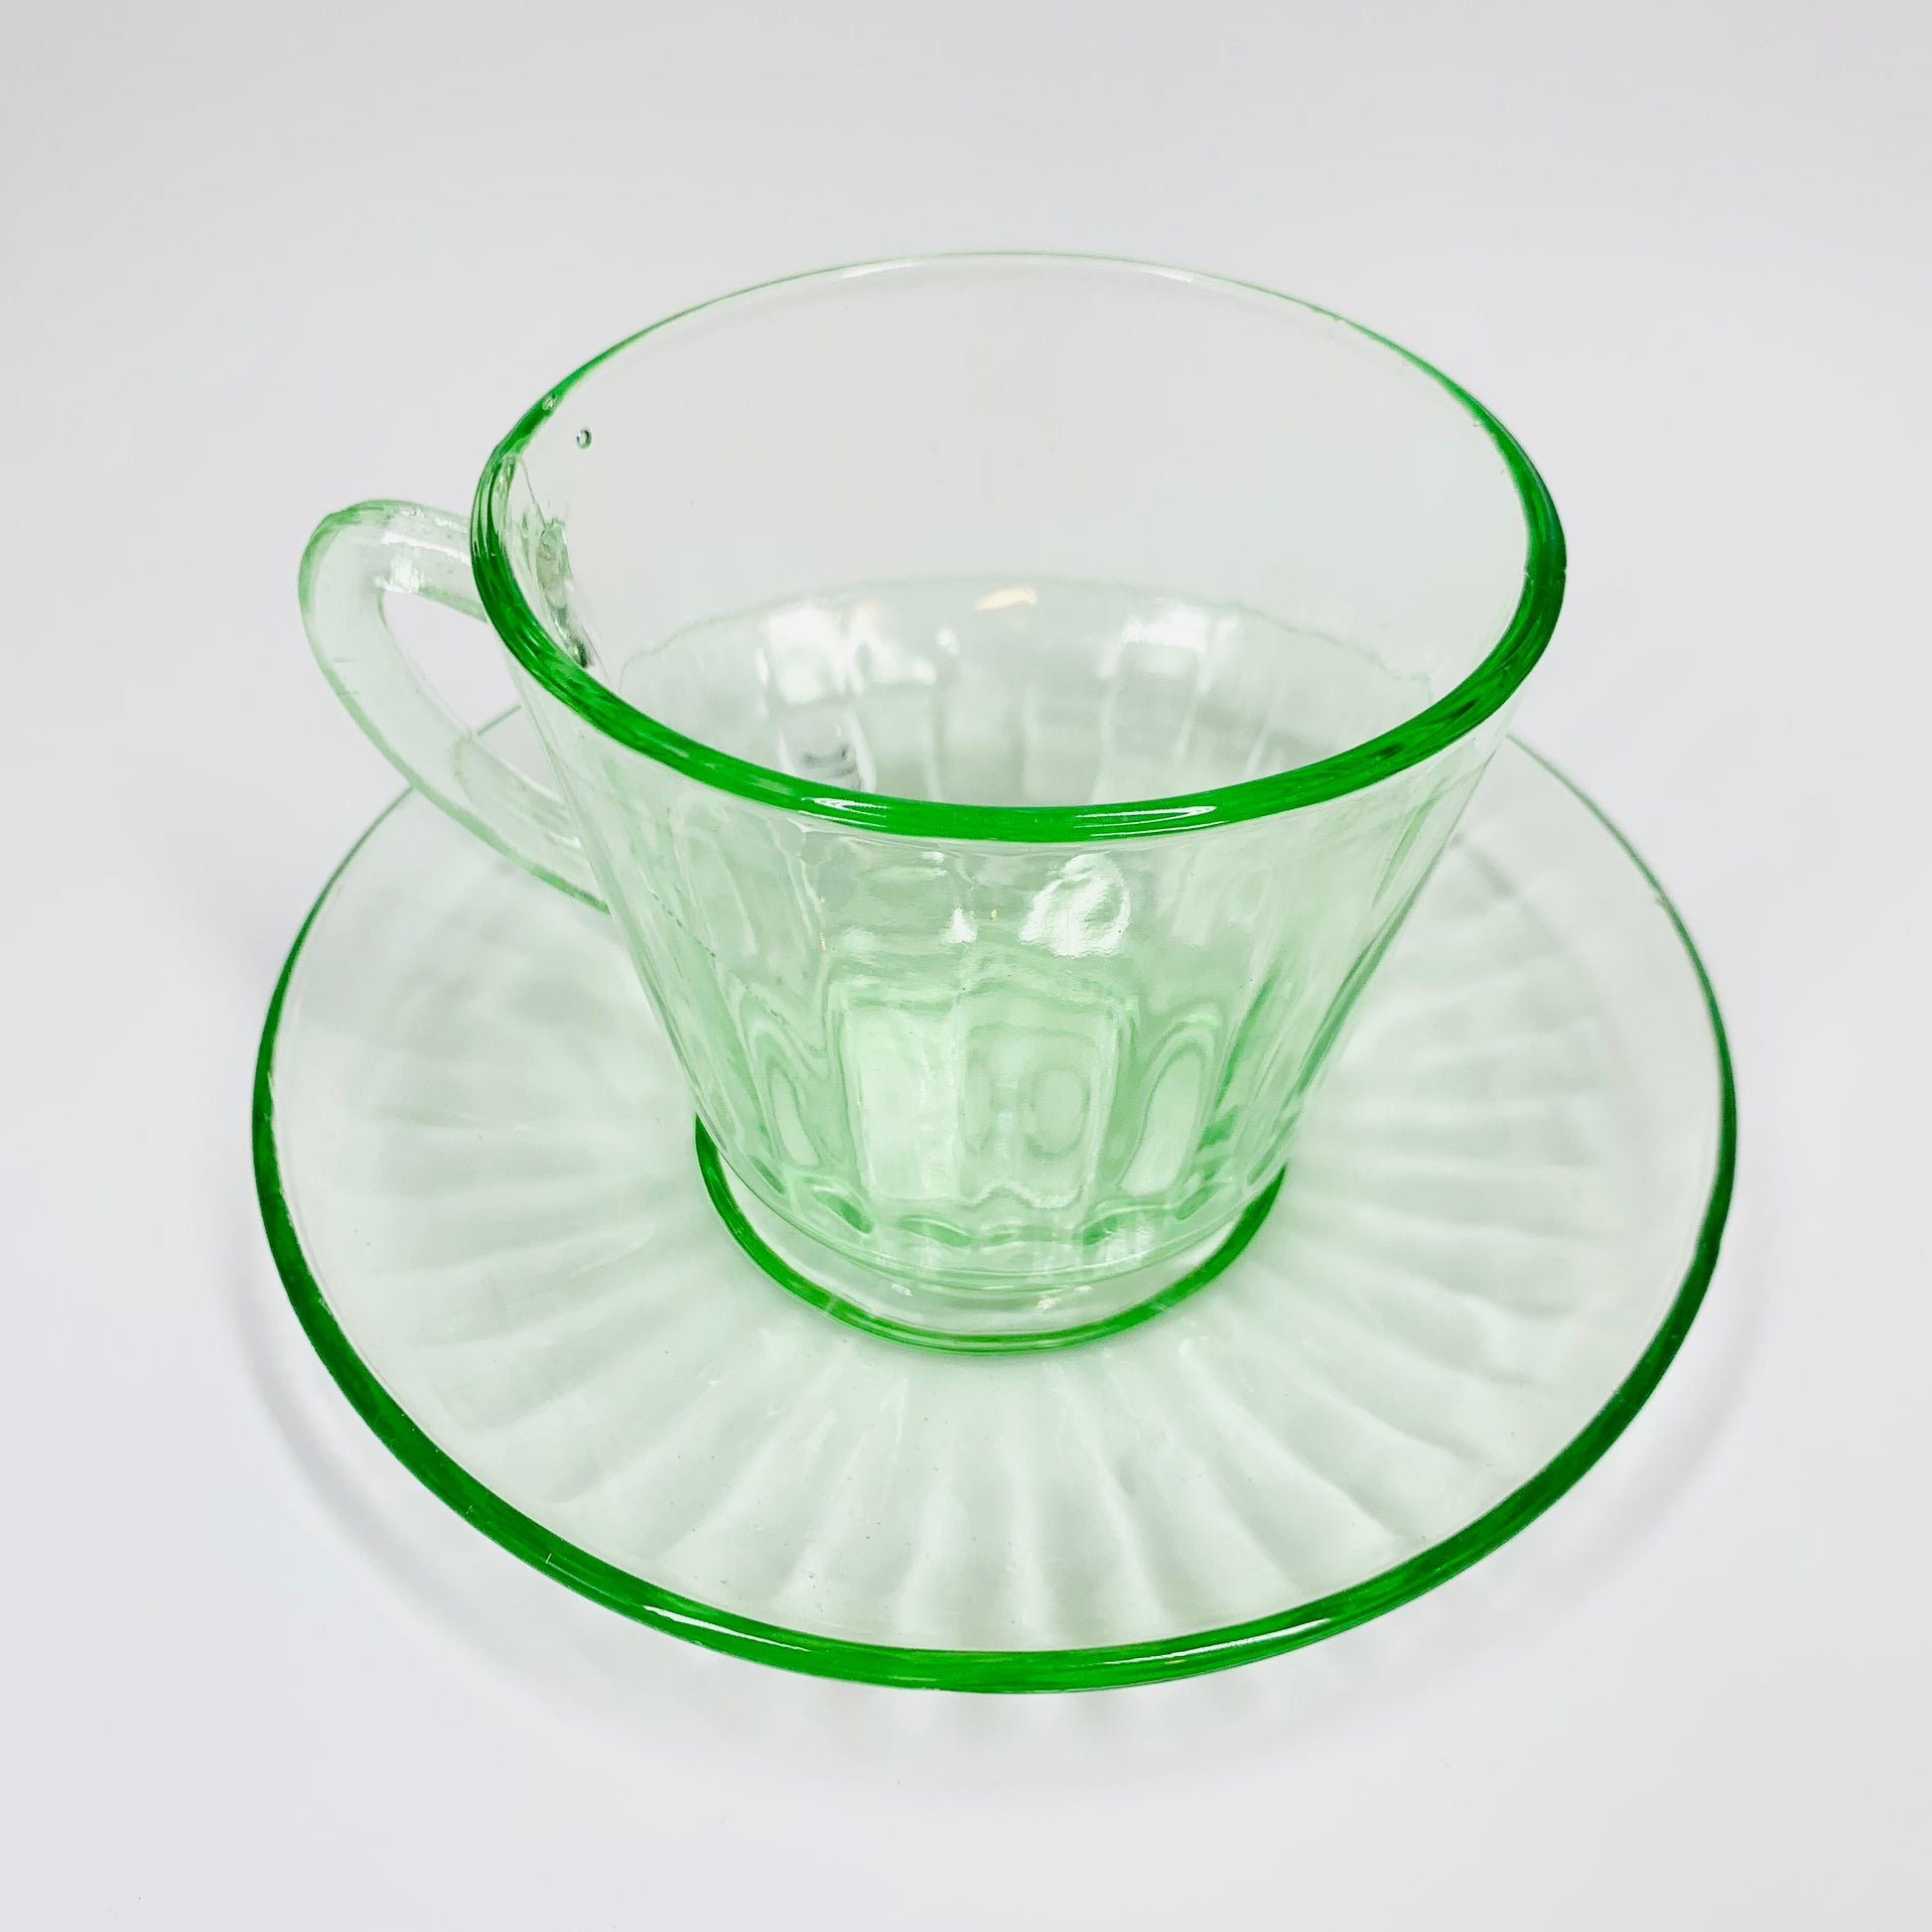 Green Depression Glass Trio, Green Depression Glass Tea Set, Depression Tea  Cup, Saucer, Plate for Tea Time, Tea Party #A623